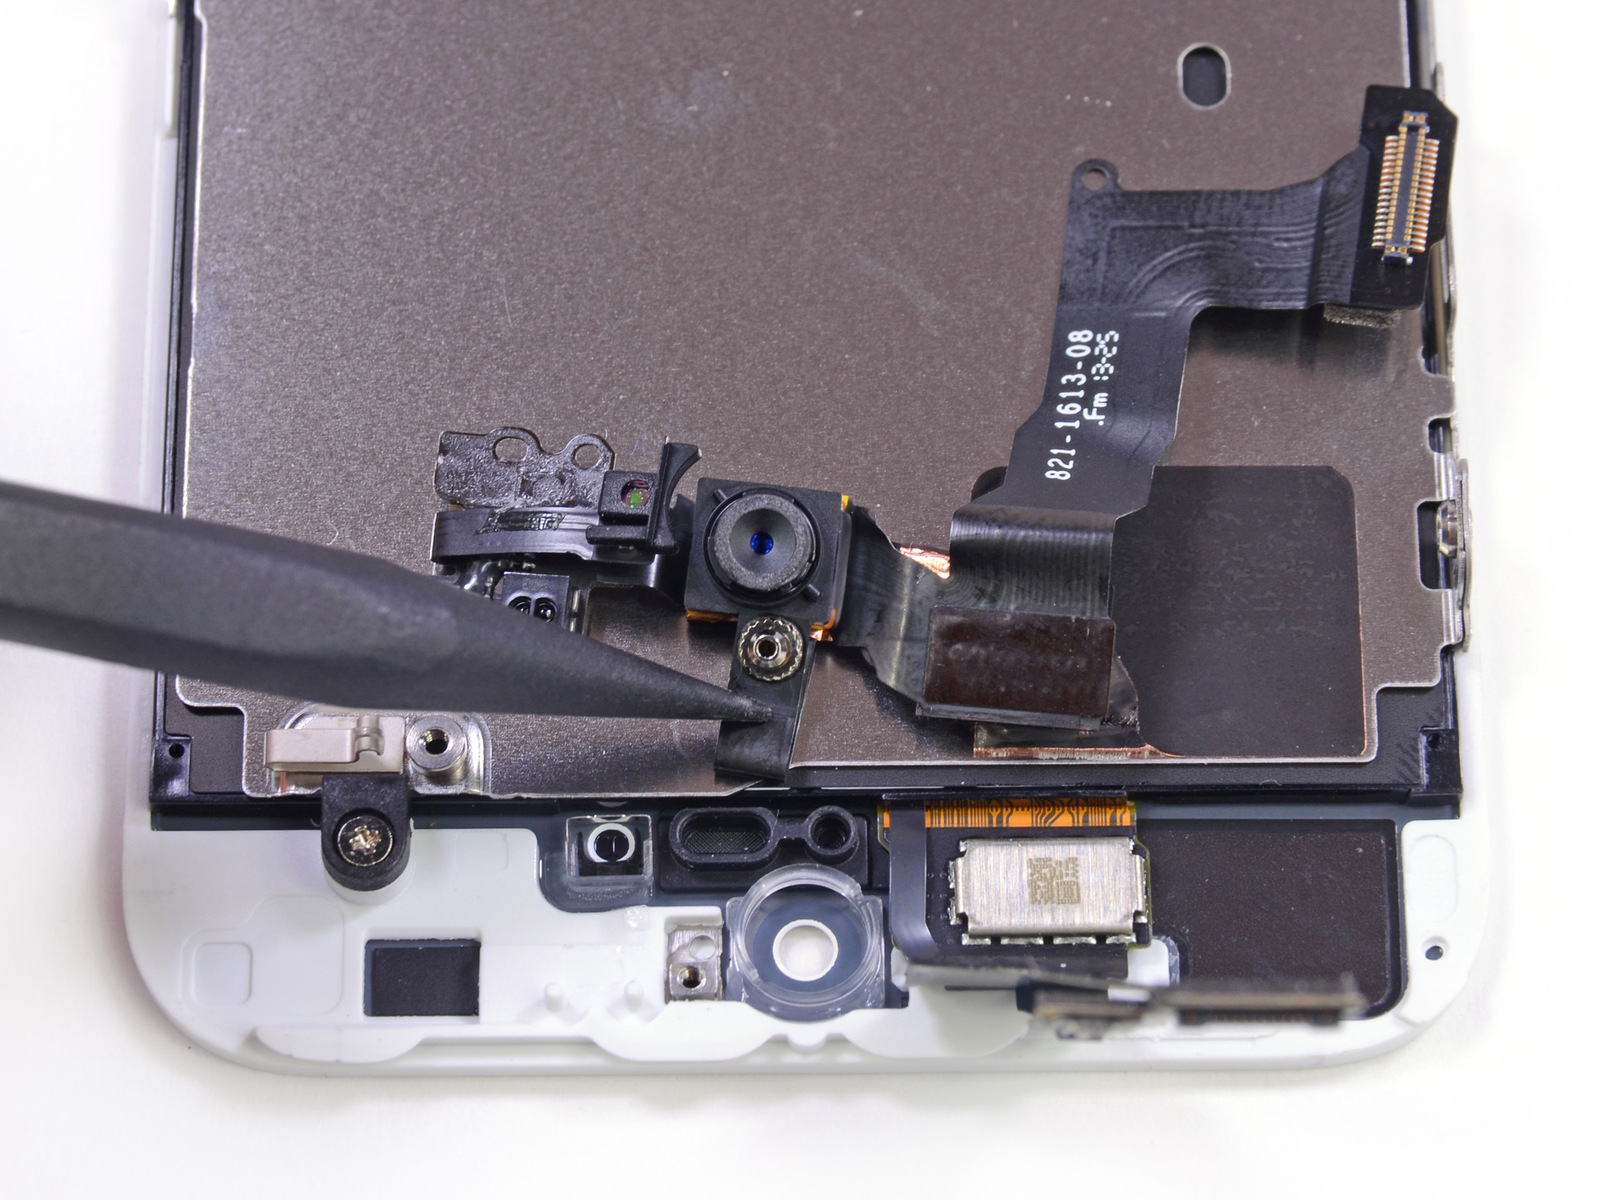 Desmontagem do iPhone 5s dourado - iFixit